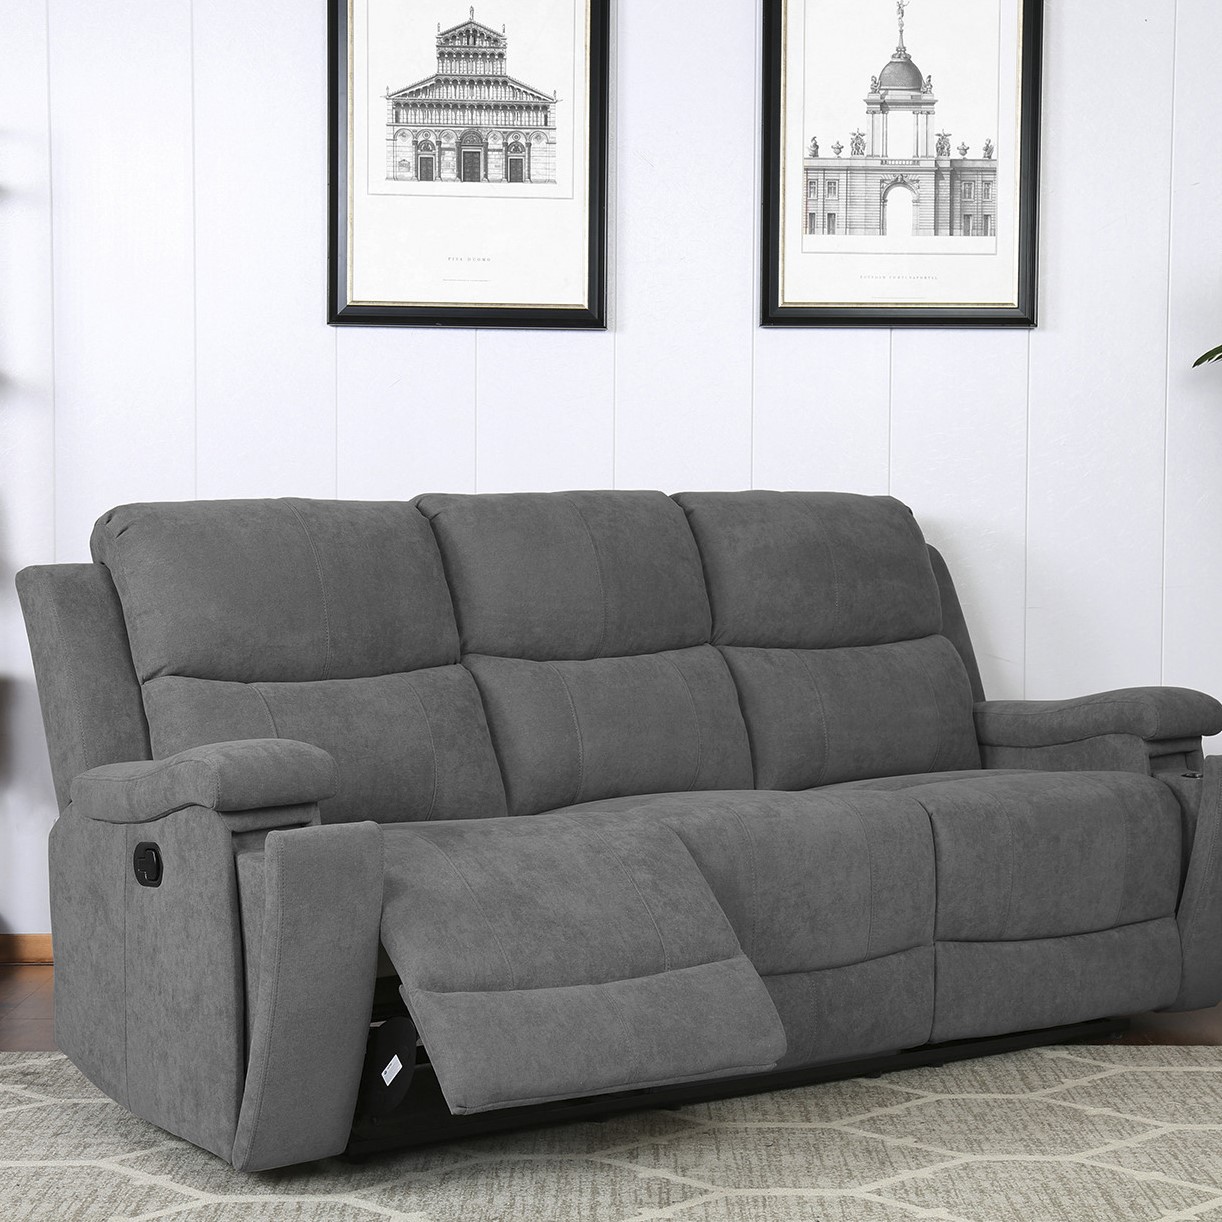 Ledbury 3 Seater Dark Grey Fabric Manual Recliner Sofa Image 1